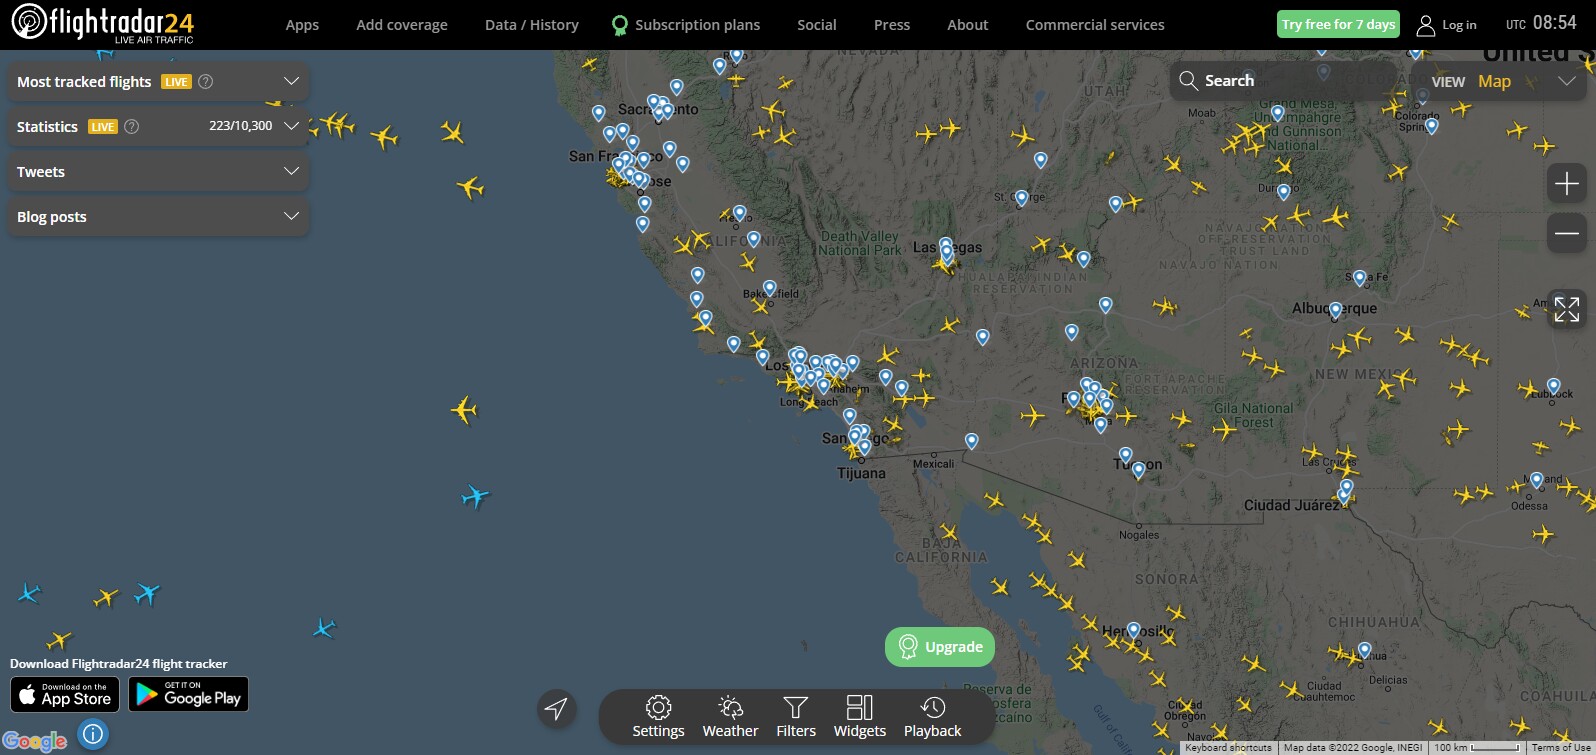 Snip - Flightradar24 Live - Real-Time Flight Tracker Map - Google Chrome (2)